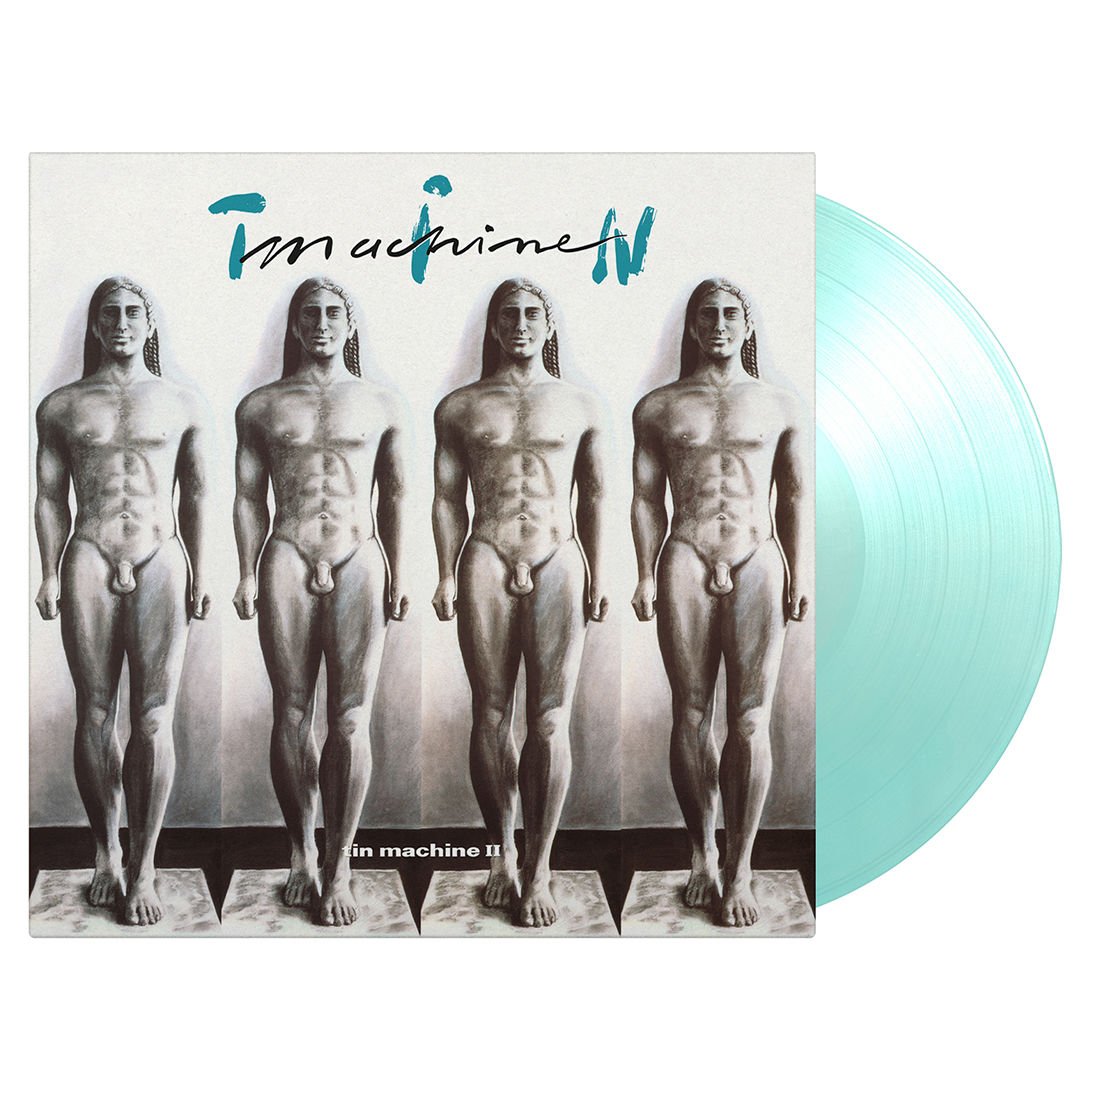 Tin Machine - Tin Machine II: Limited Crystal Clear & Turquoise Vinyl LP